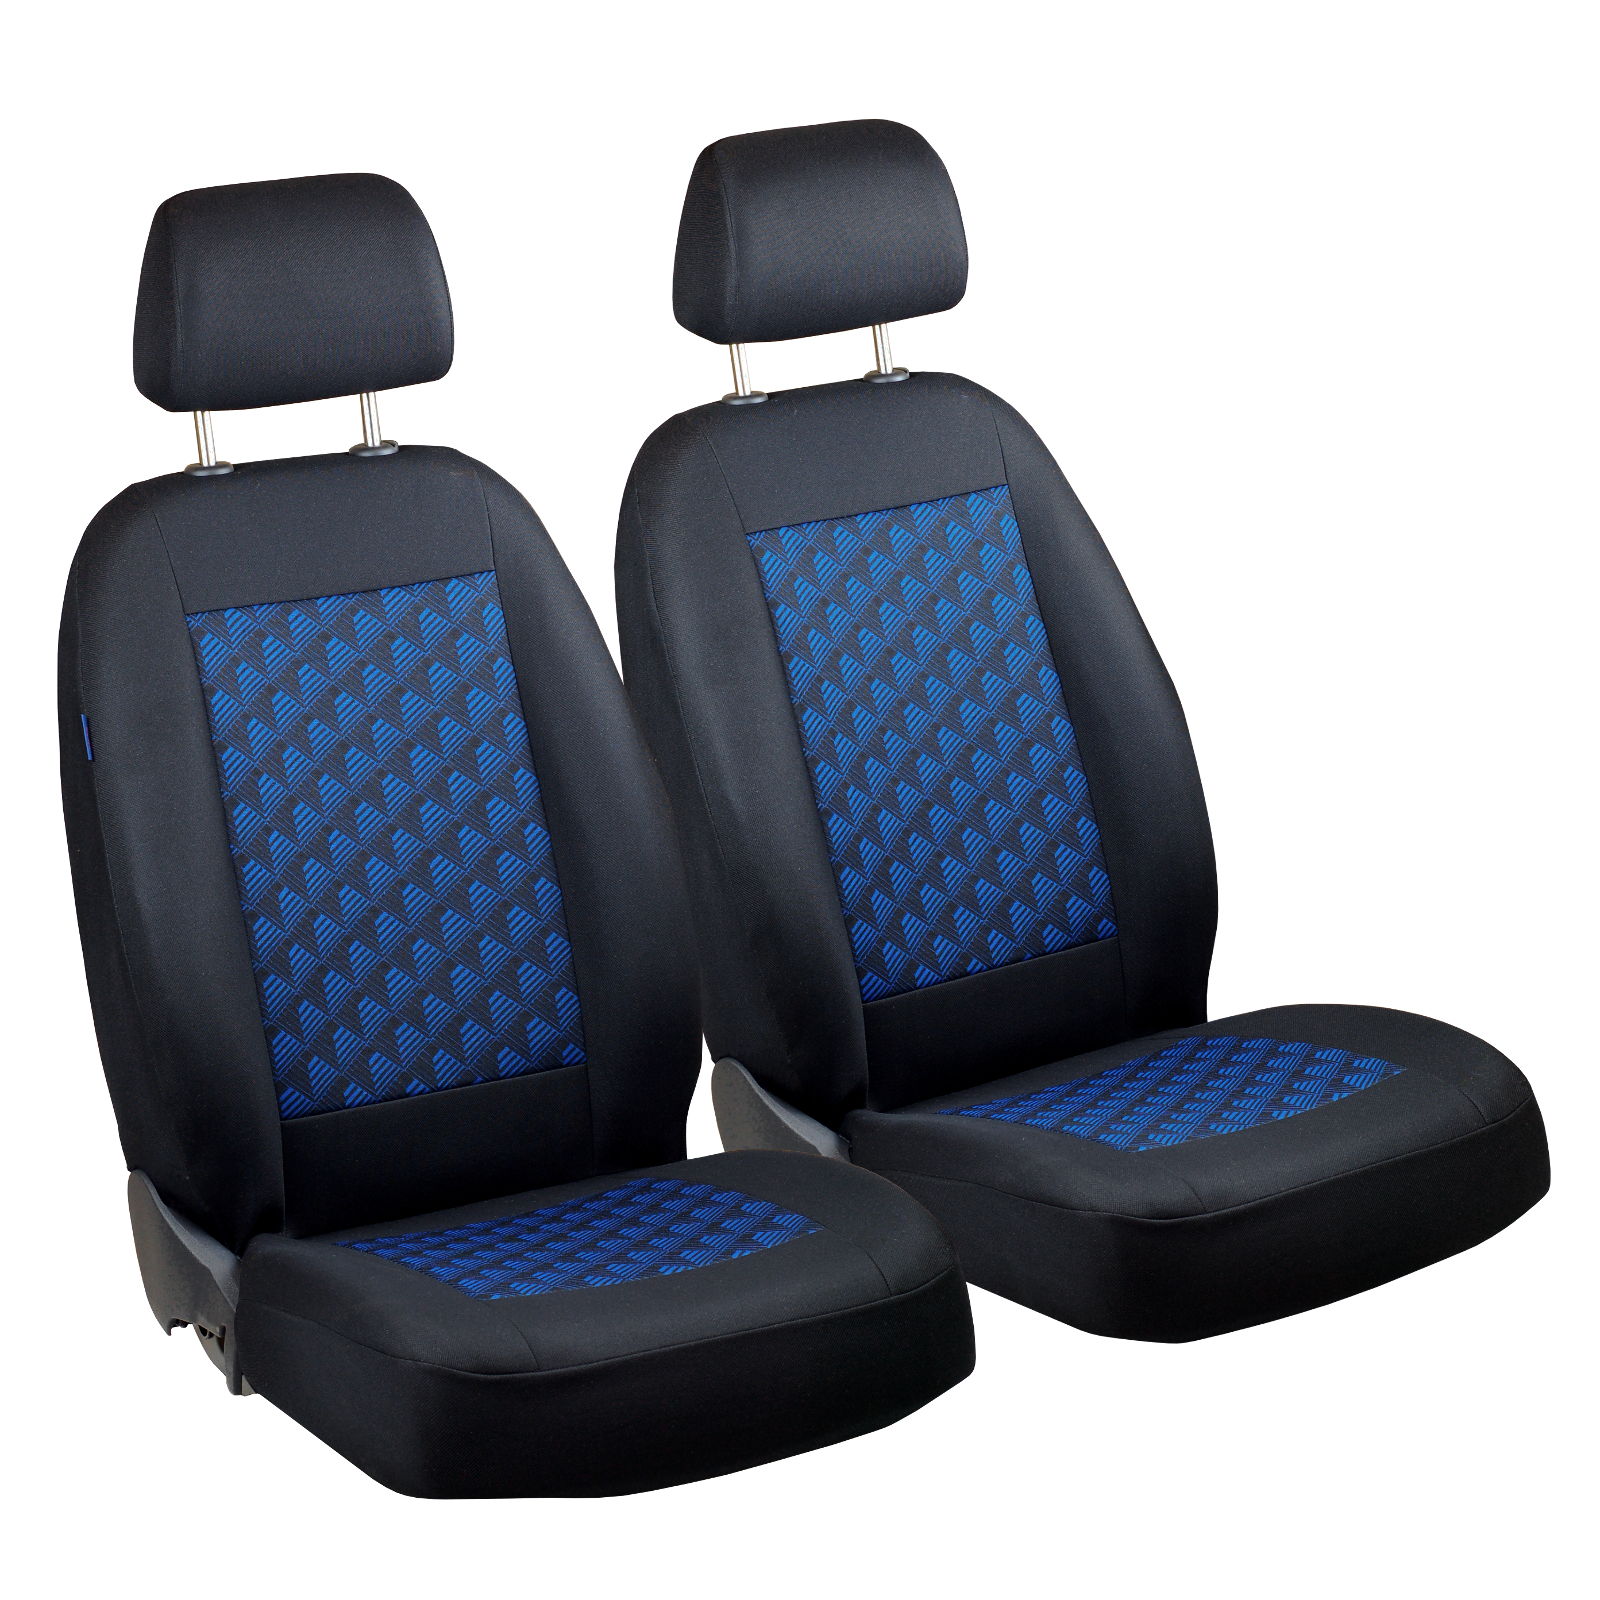 CAR SEAT COVERS FOR HONDA HRV HR-V FRONT SEATS BLACK BLUE 3D EFFECT | eBay